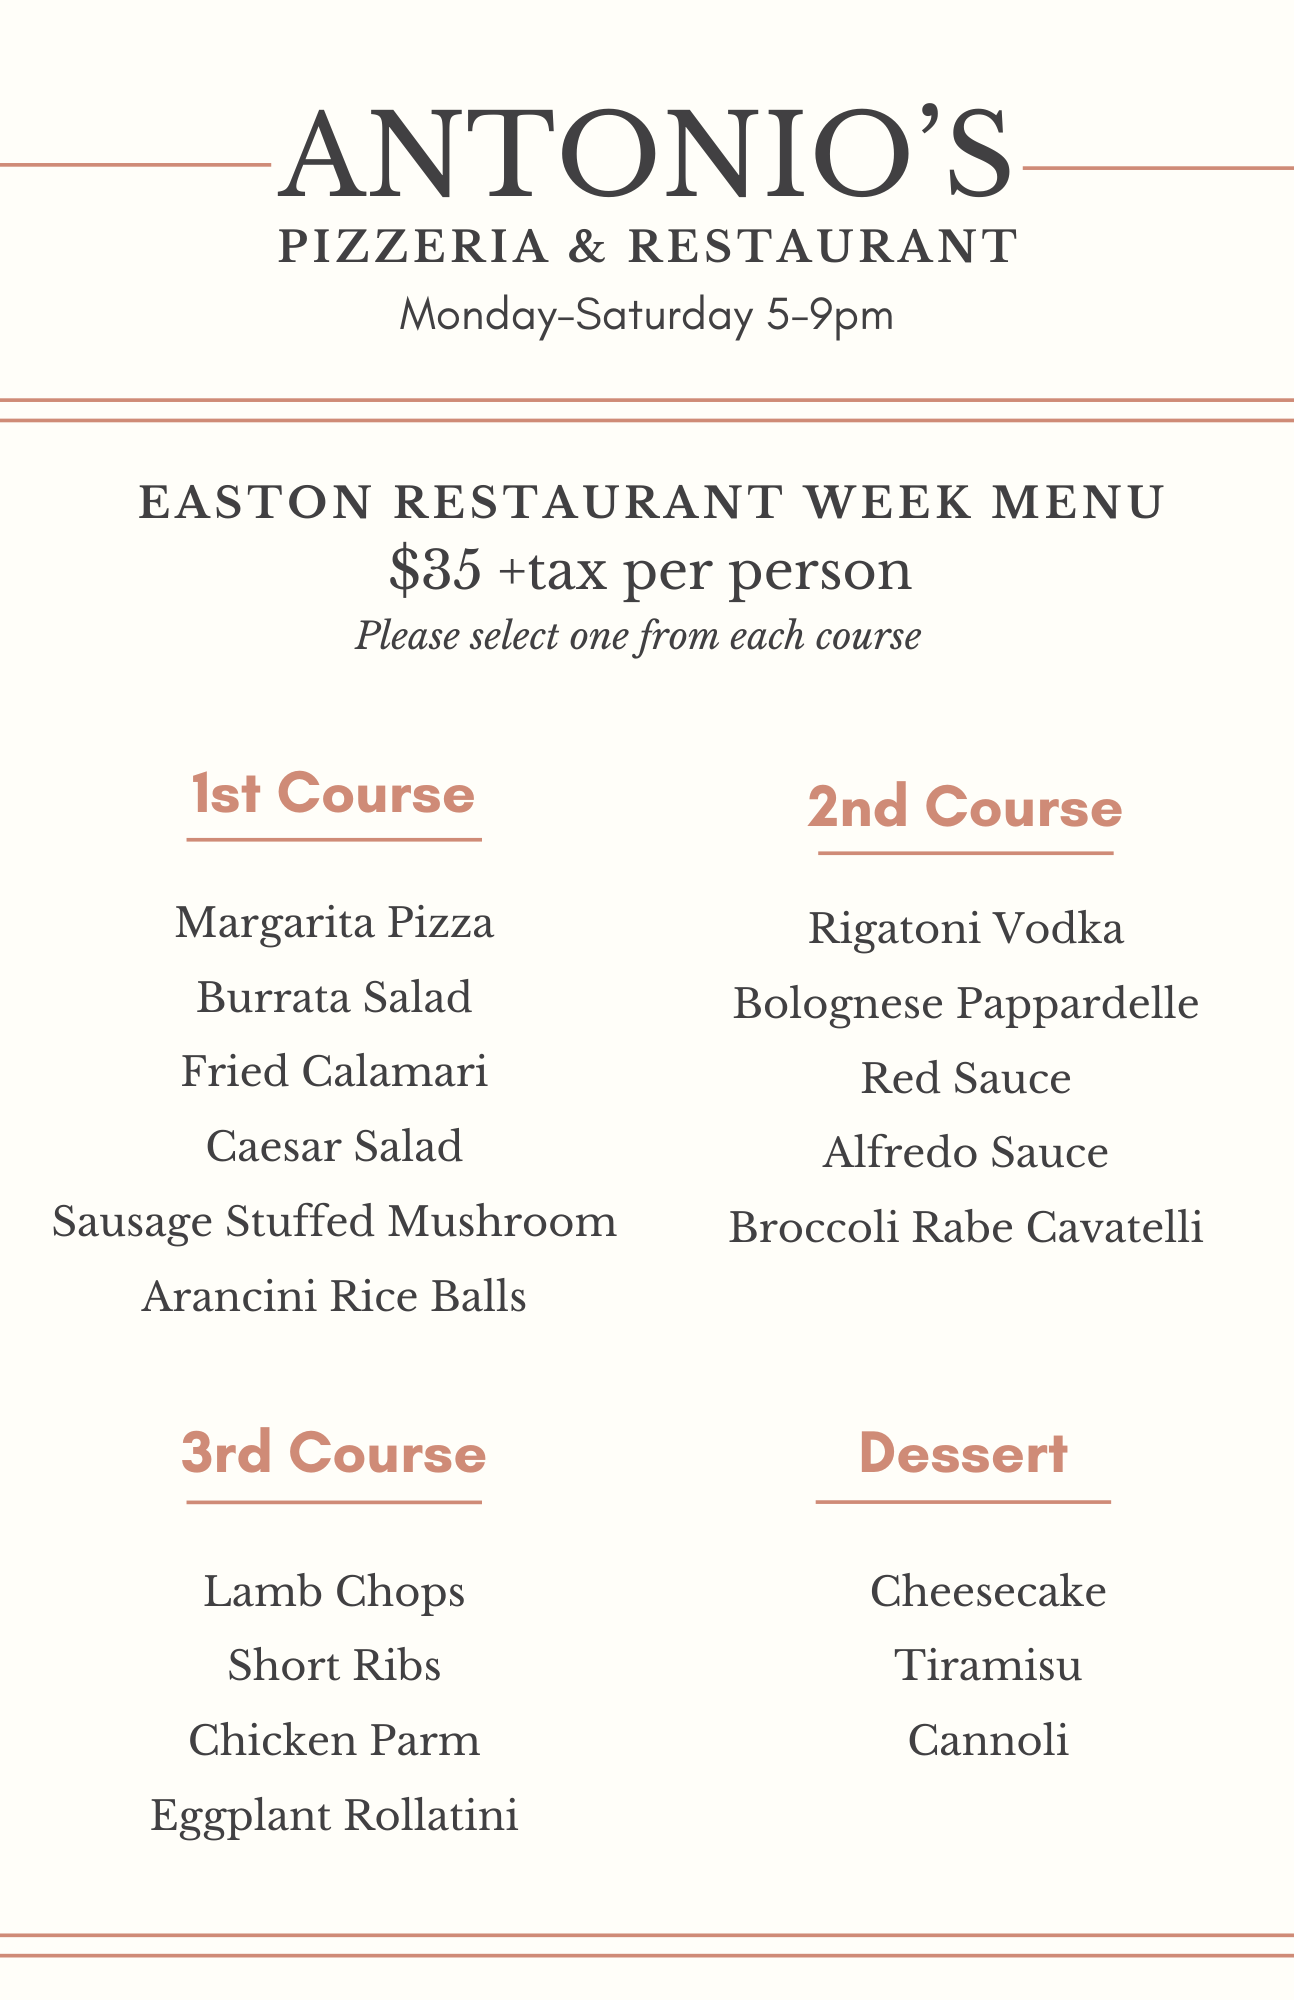 Antonio’s Pizzeria & Restaurant Easton Restaurant Week